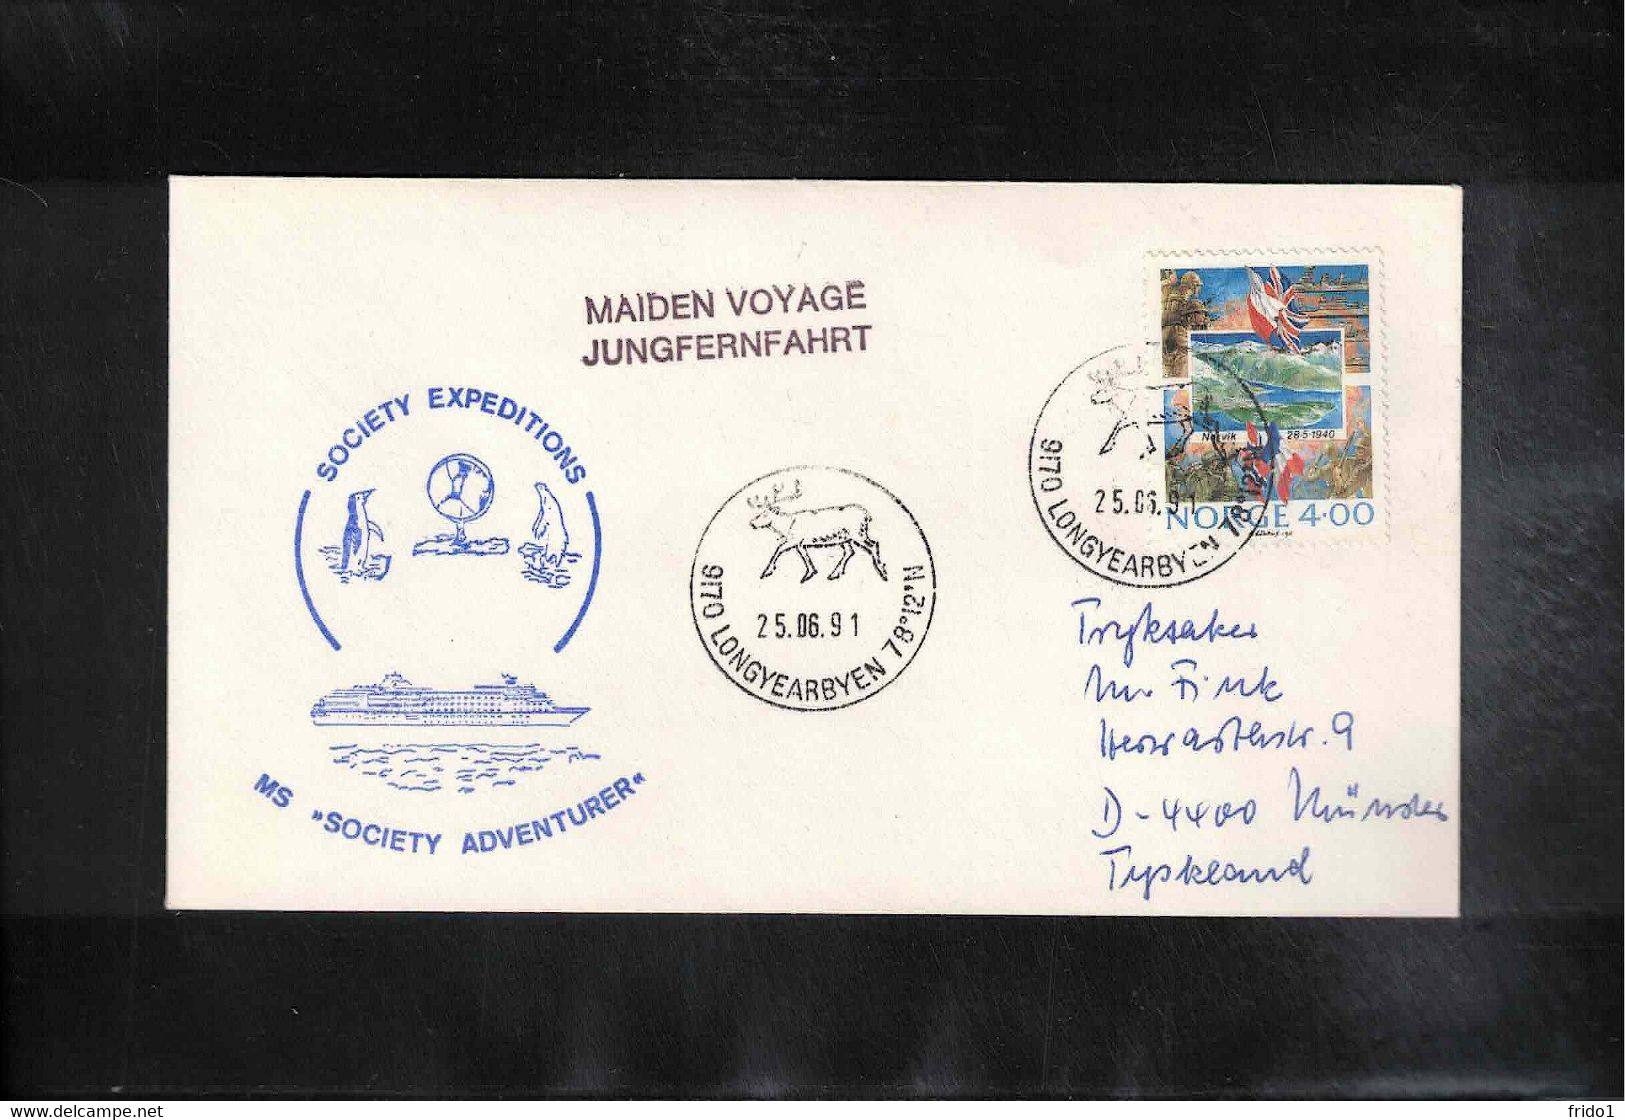 Norway 1991  Ship Maiden Voyage Of The Ship Society Adventurer Interesting Letter - Storia Postale